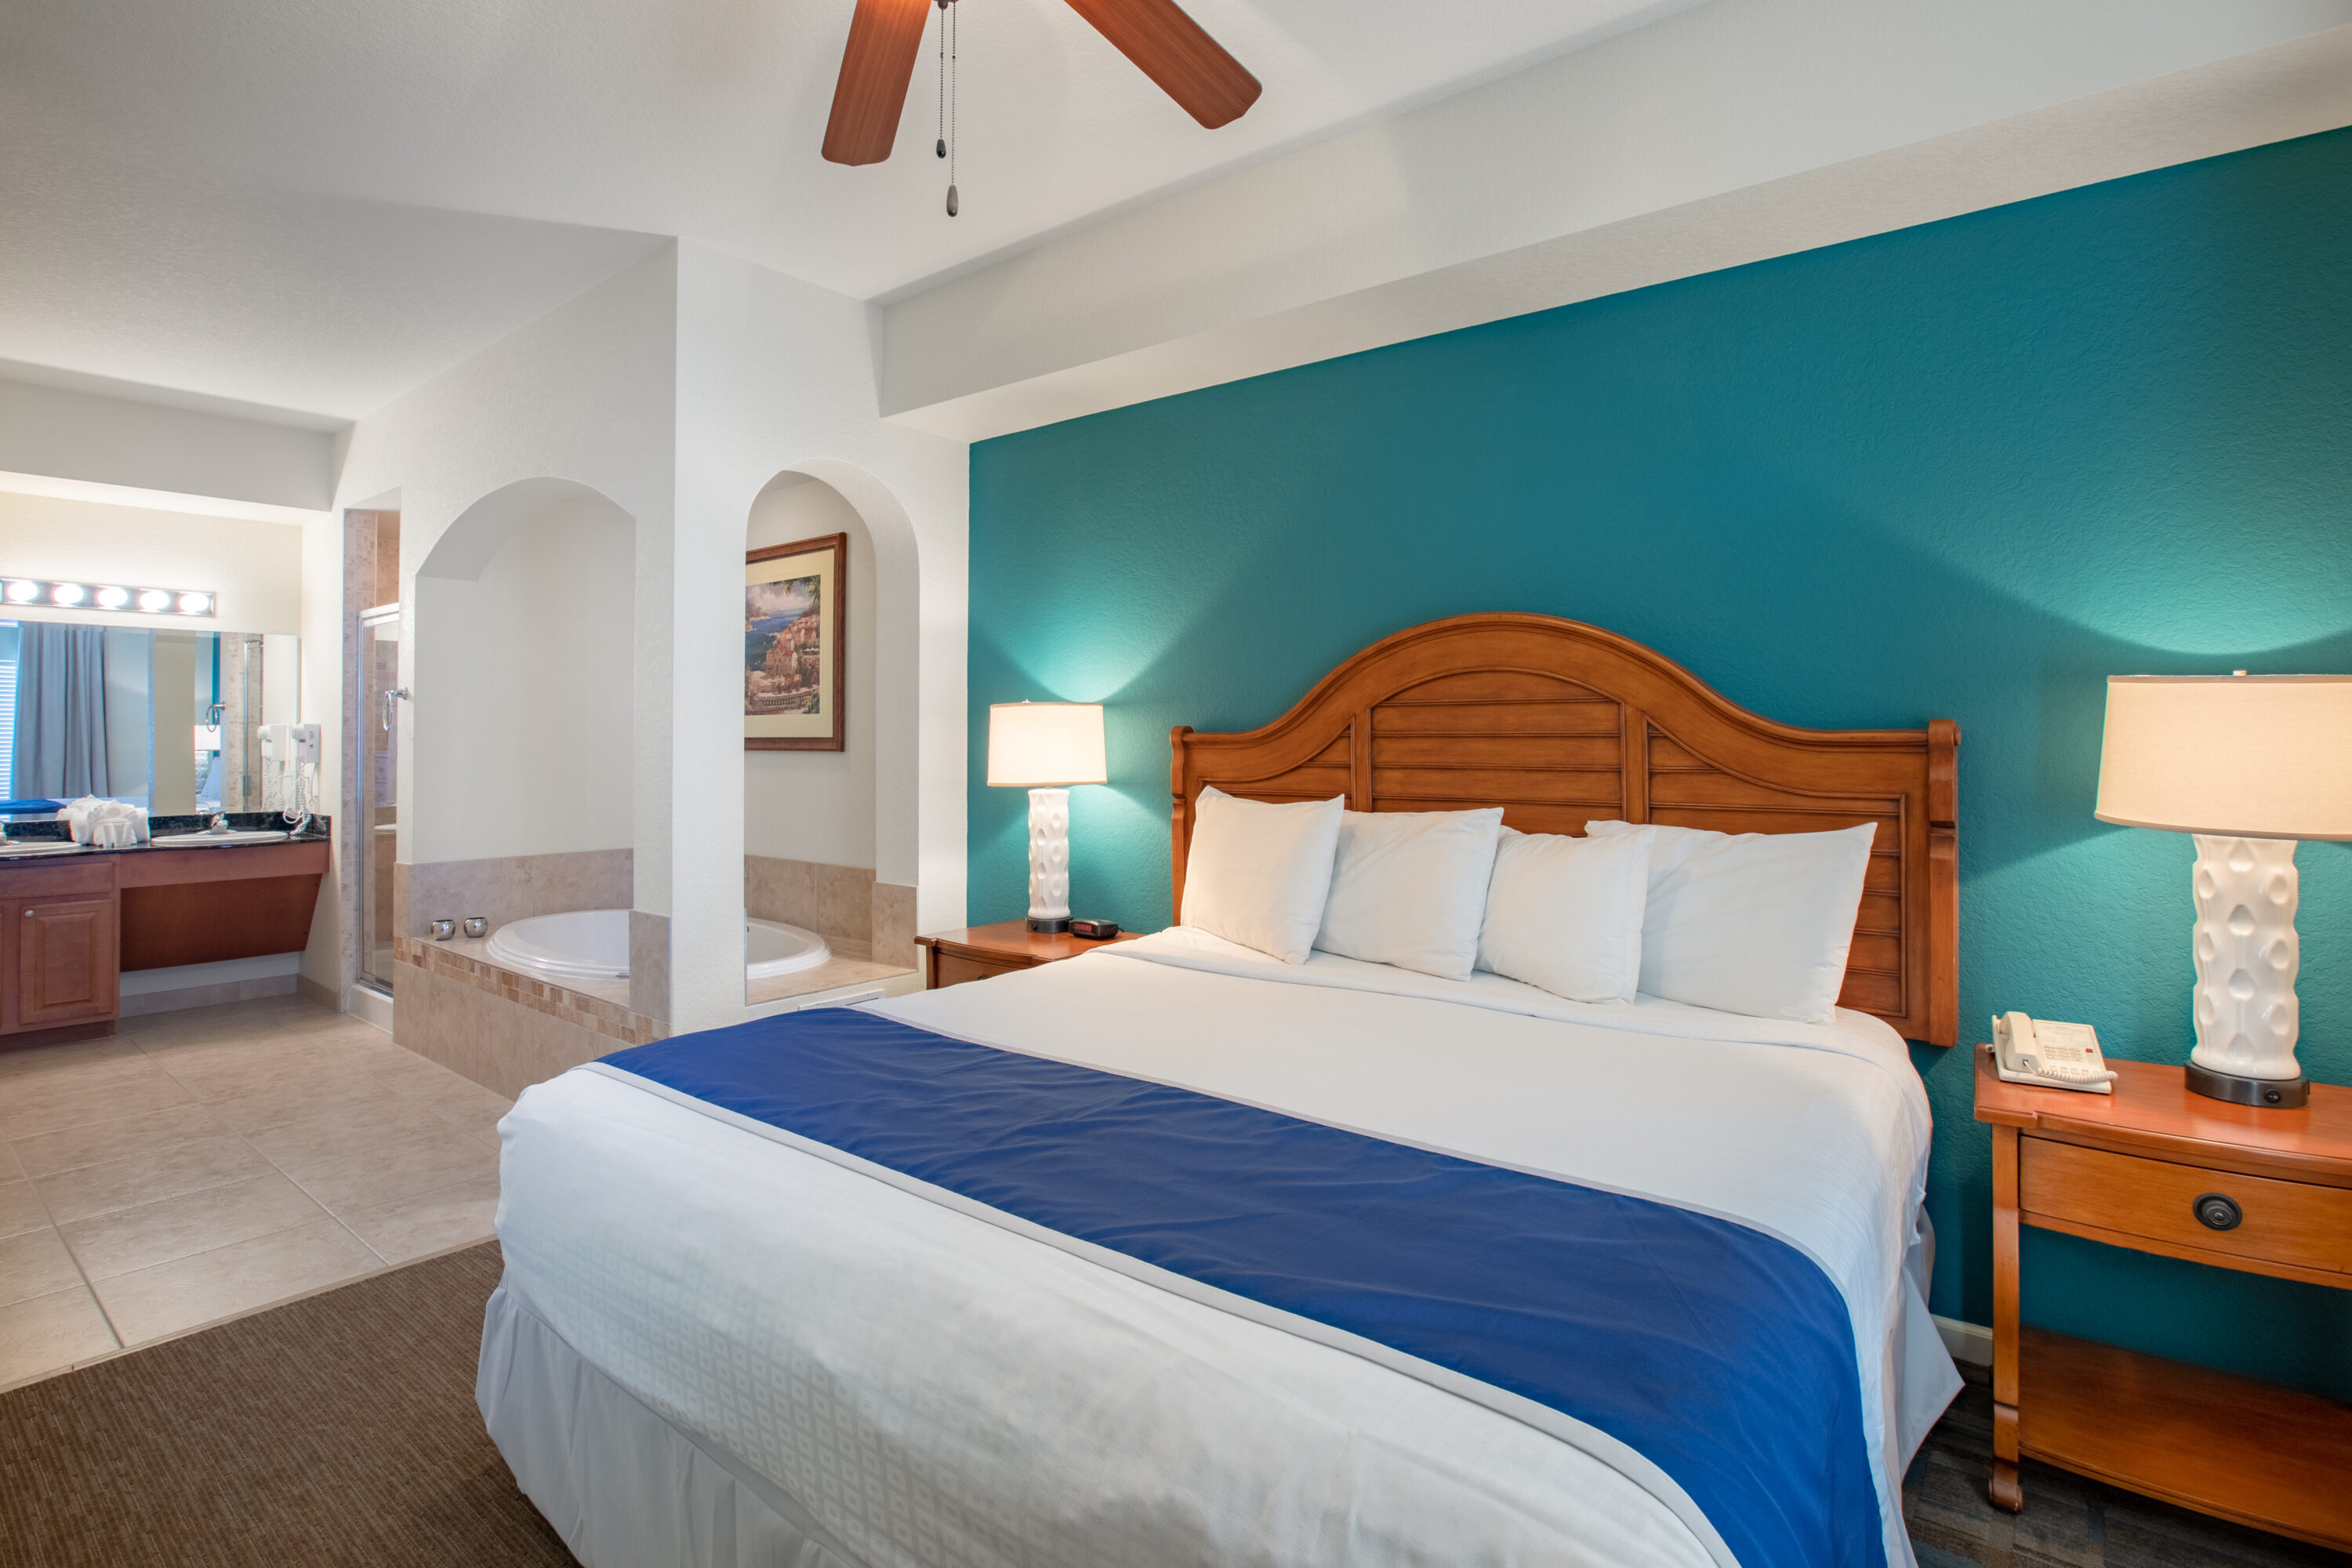 Lake Buena Vista Resort Village & Spa - Master bedroom in 2 bedroom suites - resorts in lake buena vista